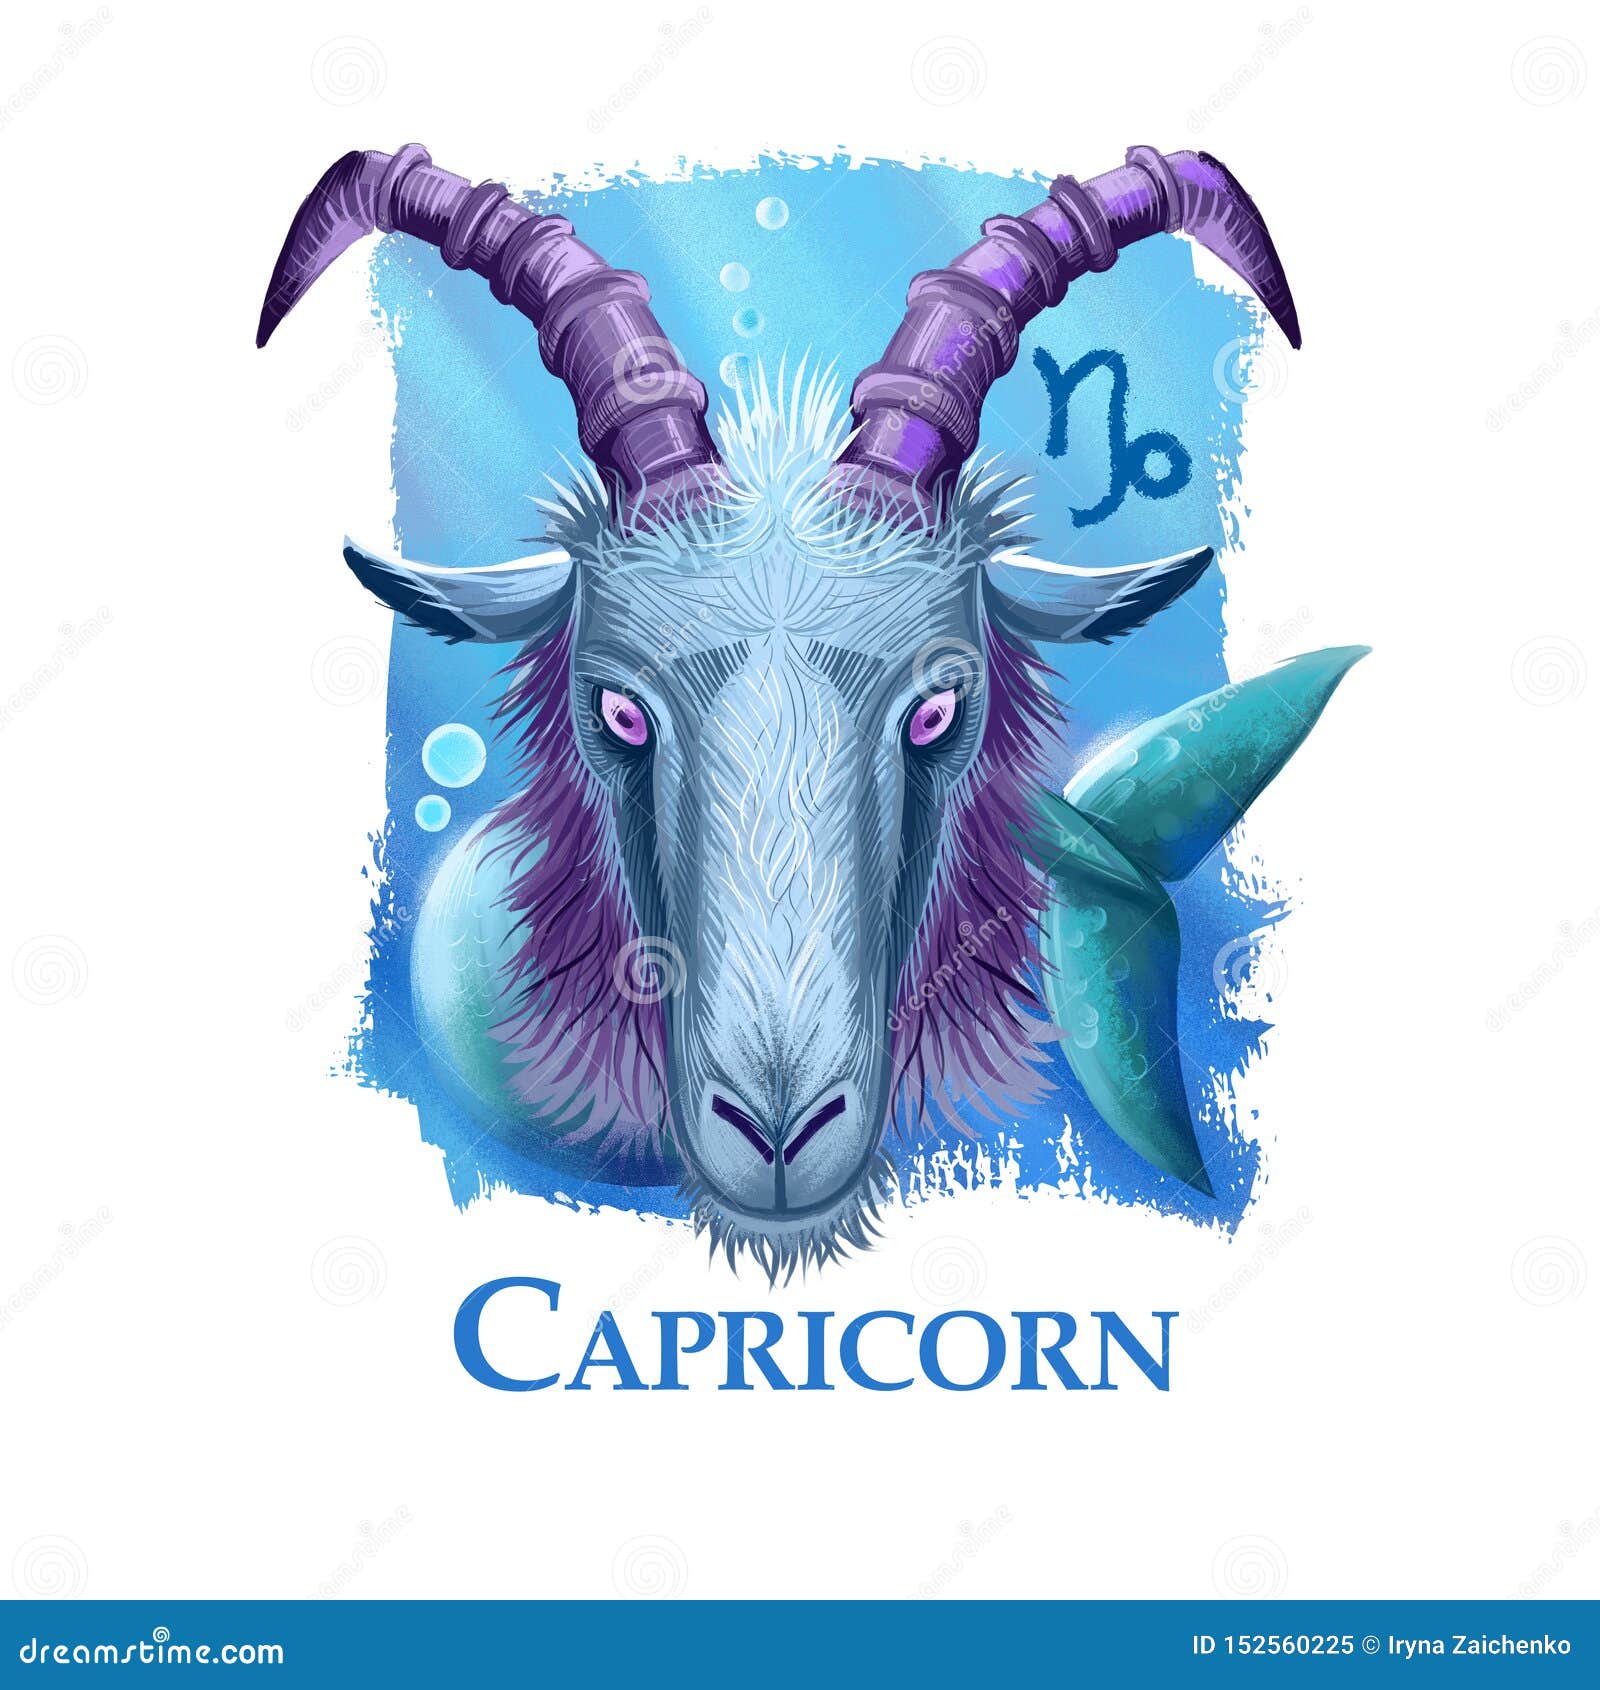 creative digital  of astrological sign capricorn. tenth of twelve signs in zodiac. horoscope earth 